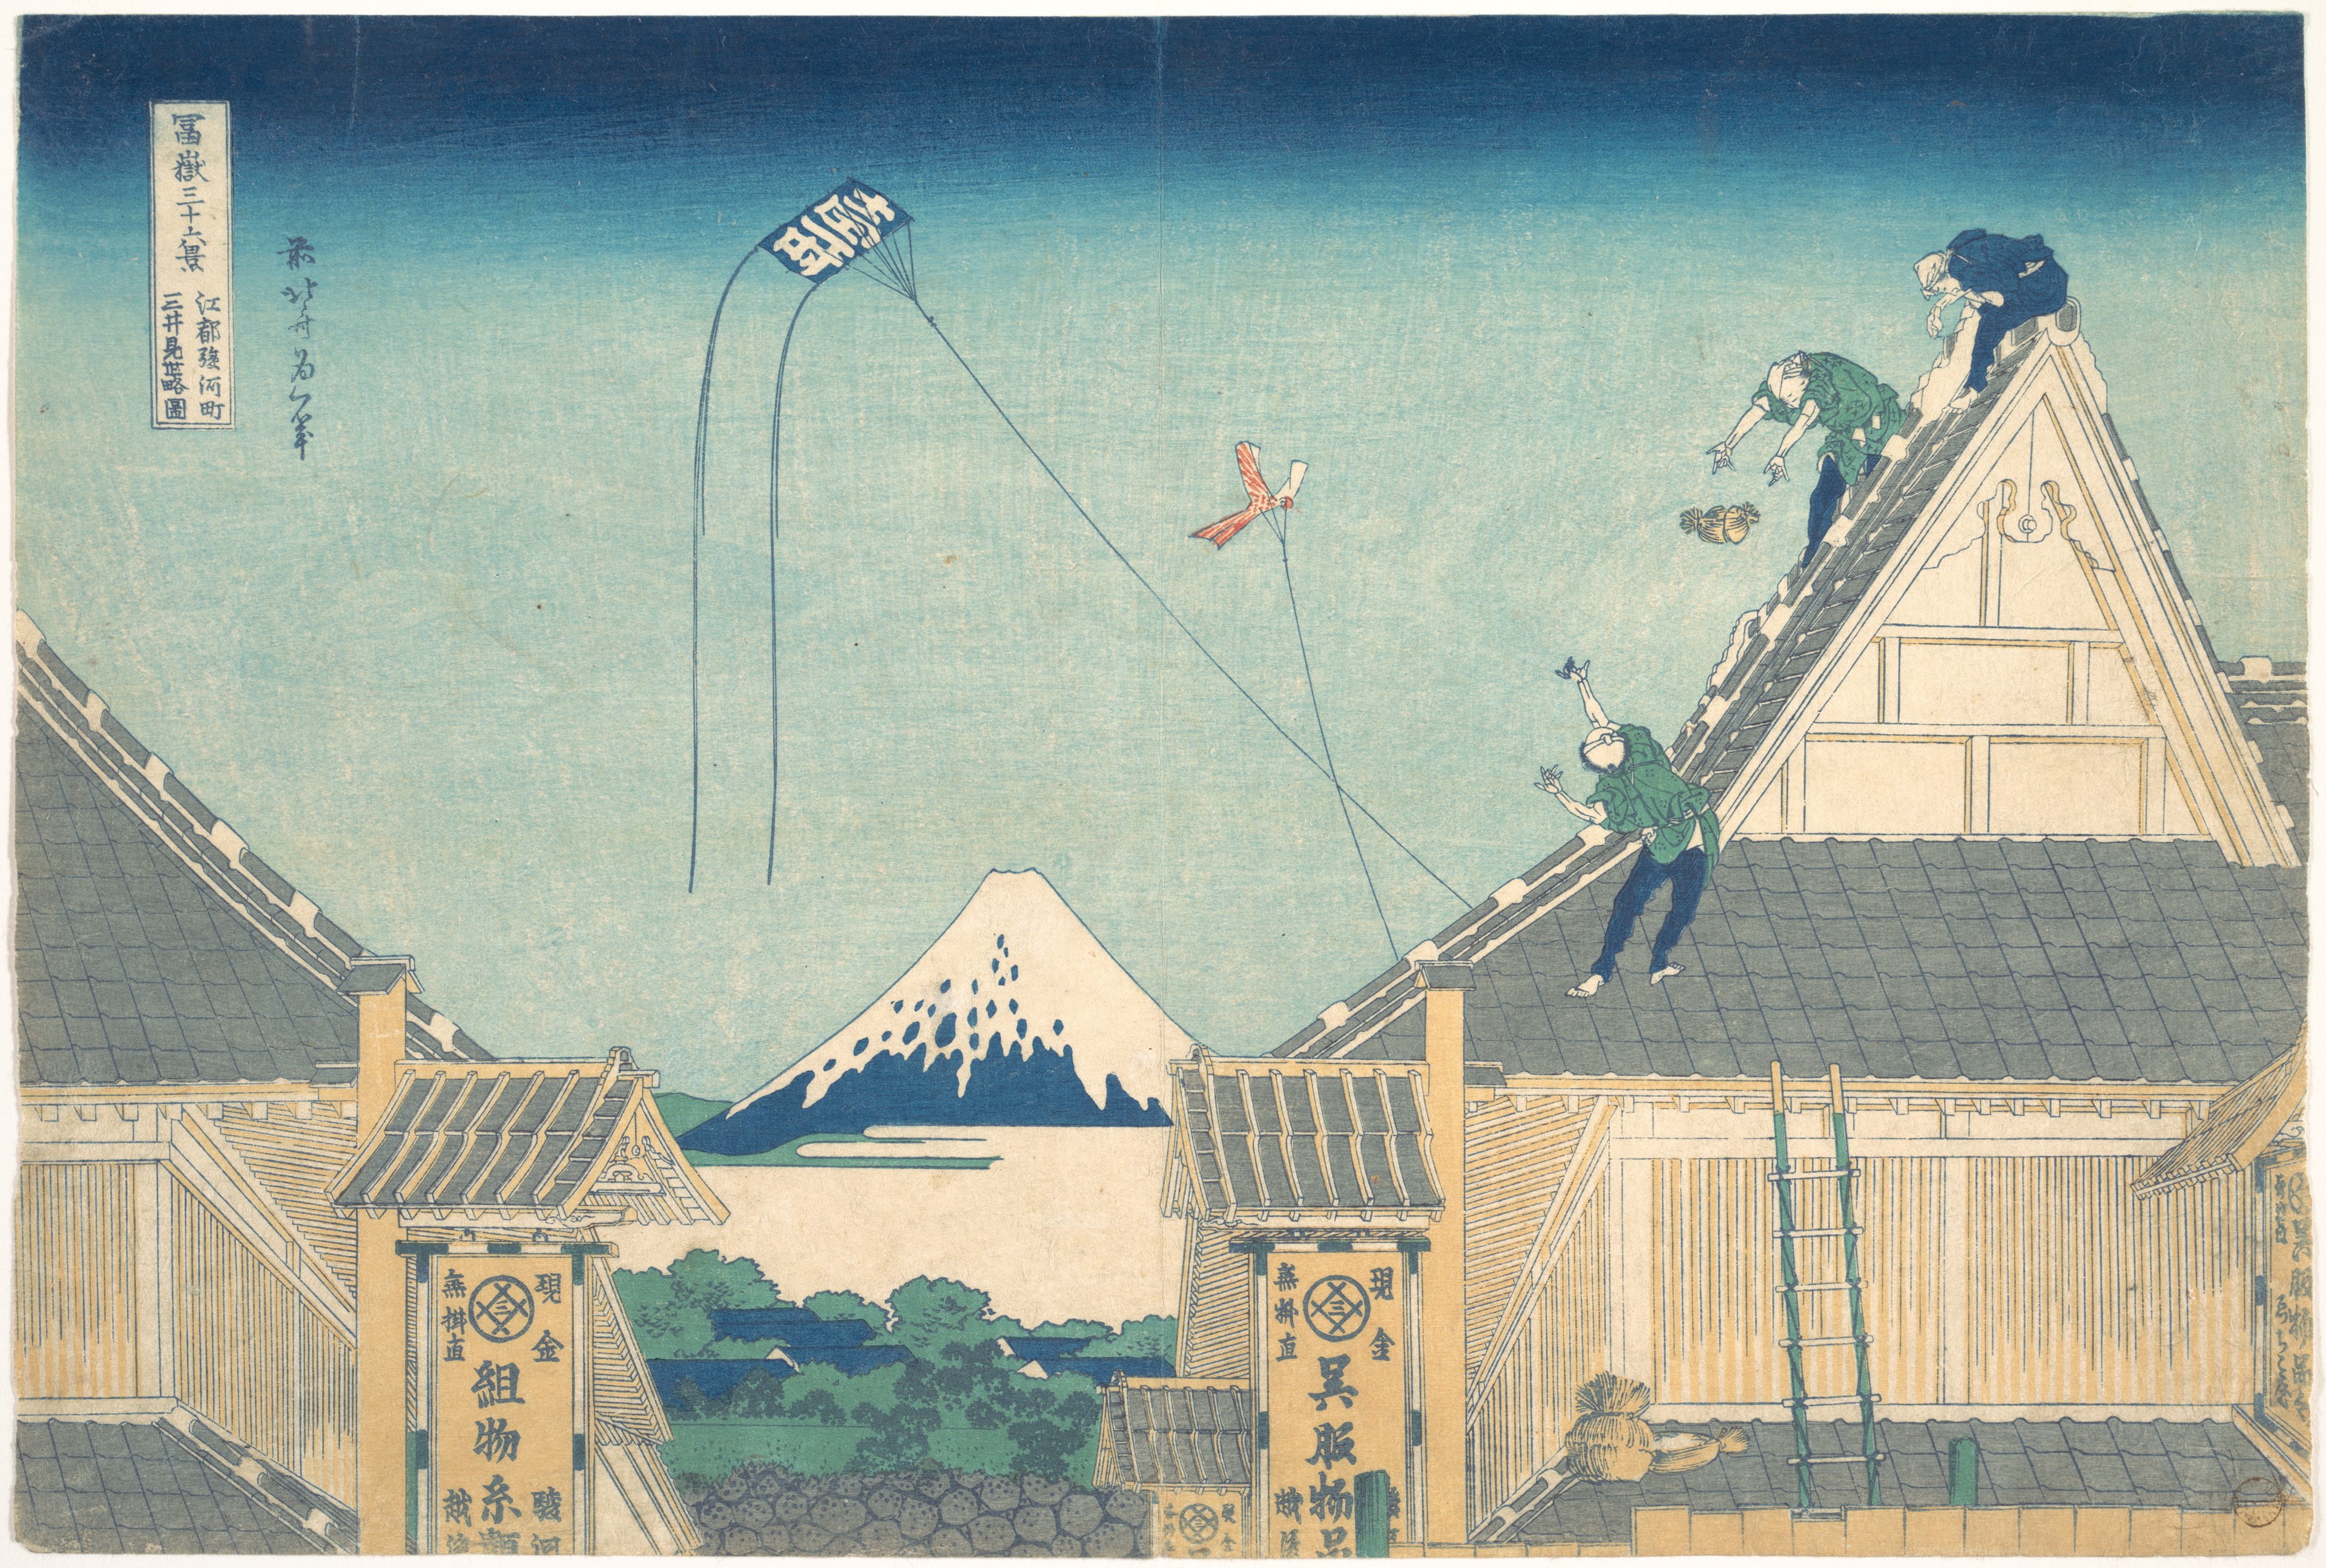 Katsushika Hokusai. Mitsui Shop at Surugachō in Edo, from the series Thirty-six Views of Mount Fuji